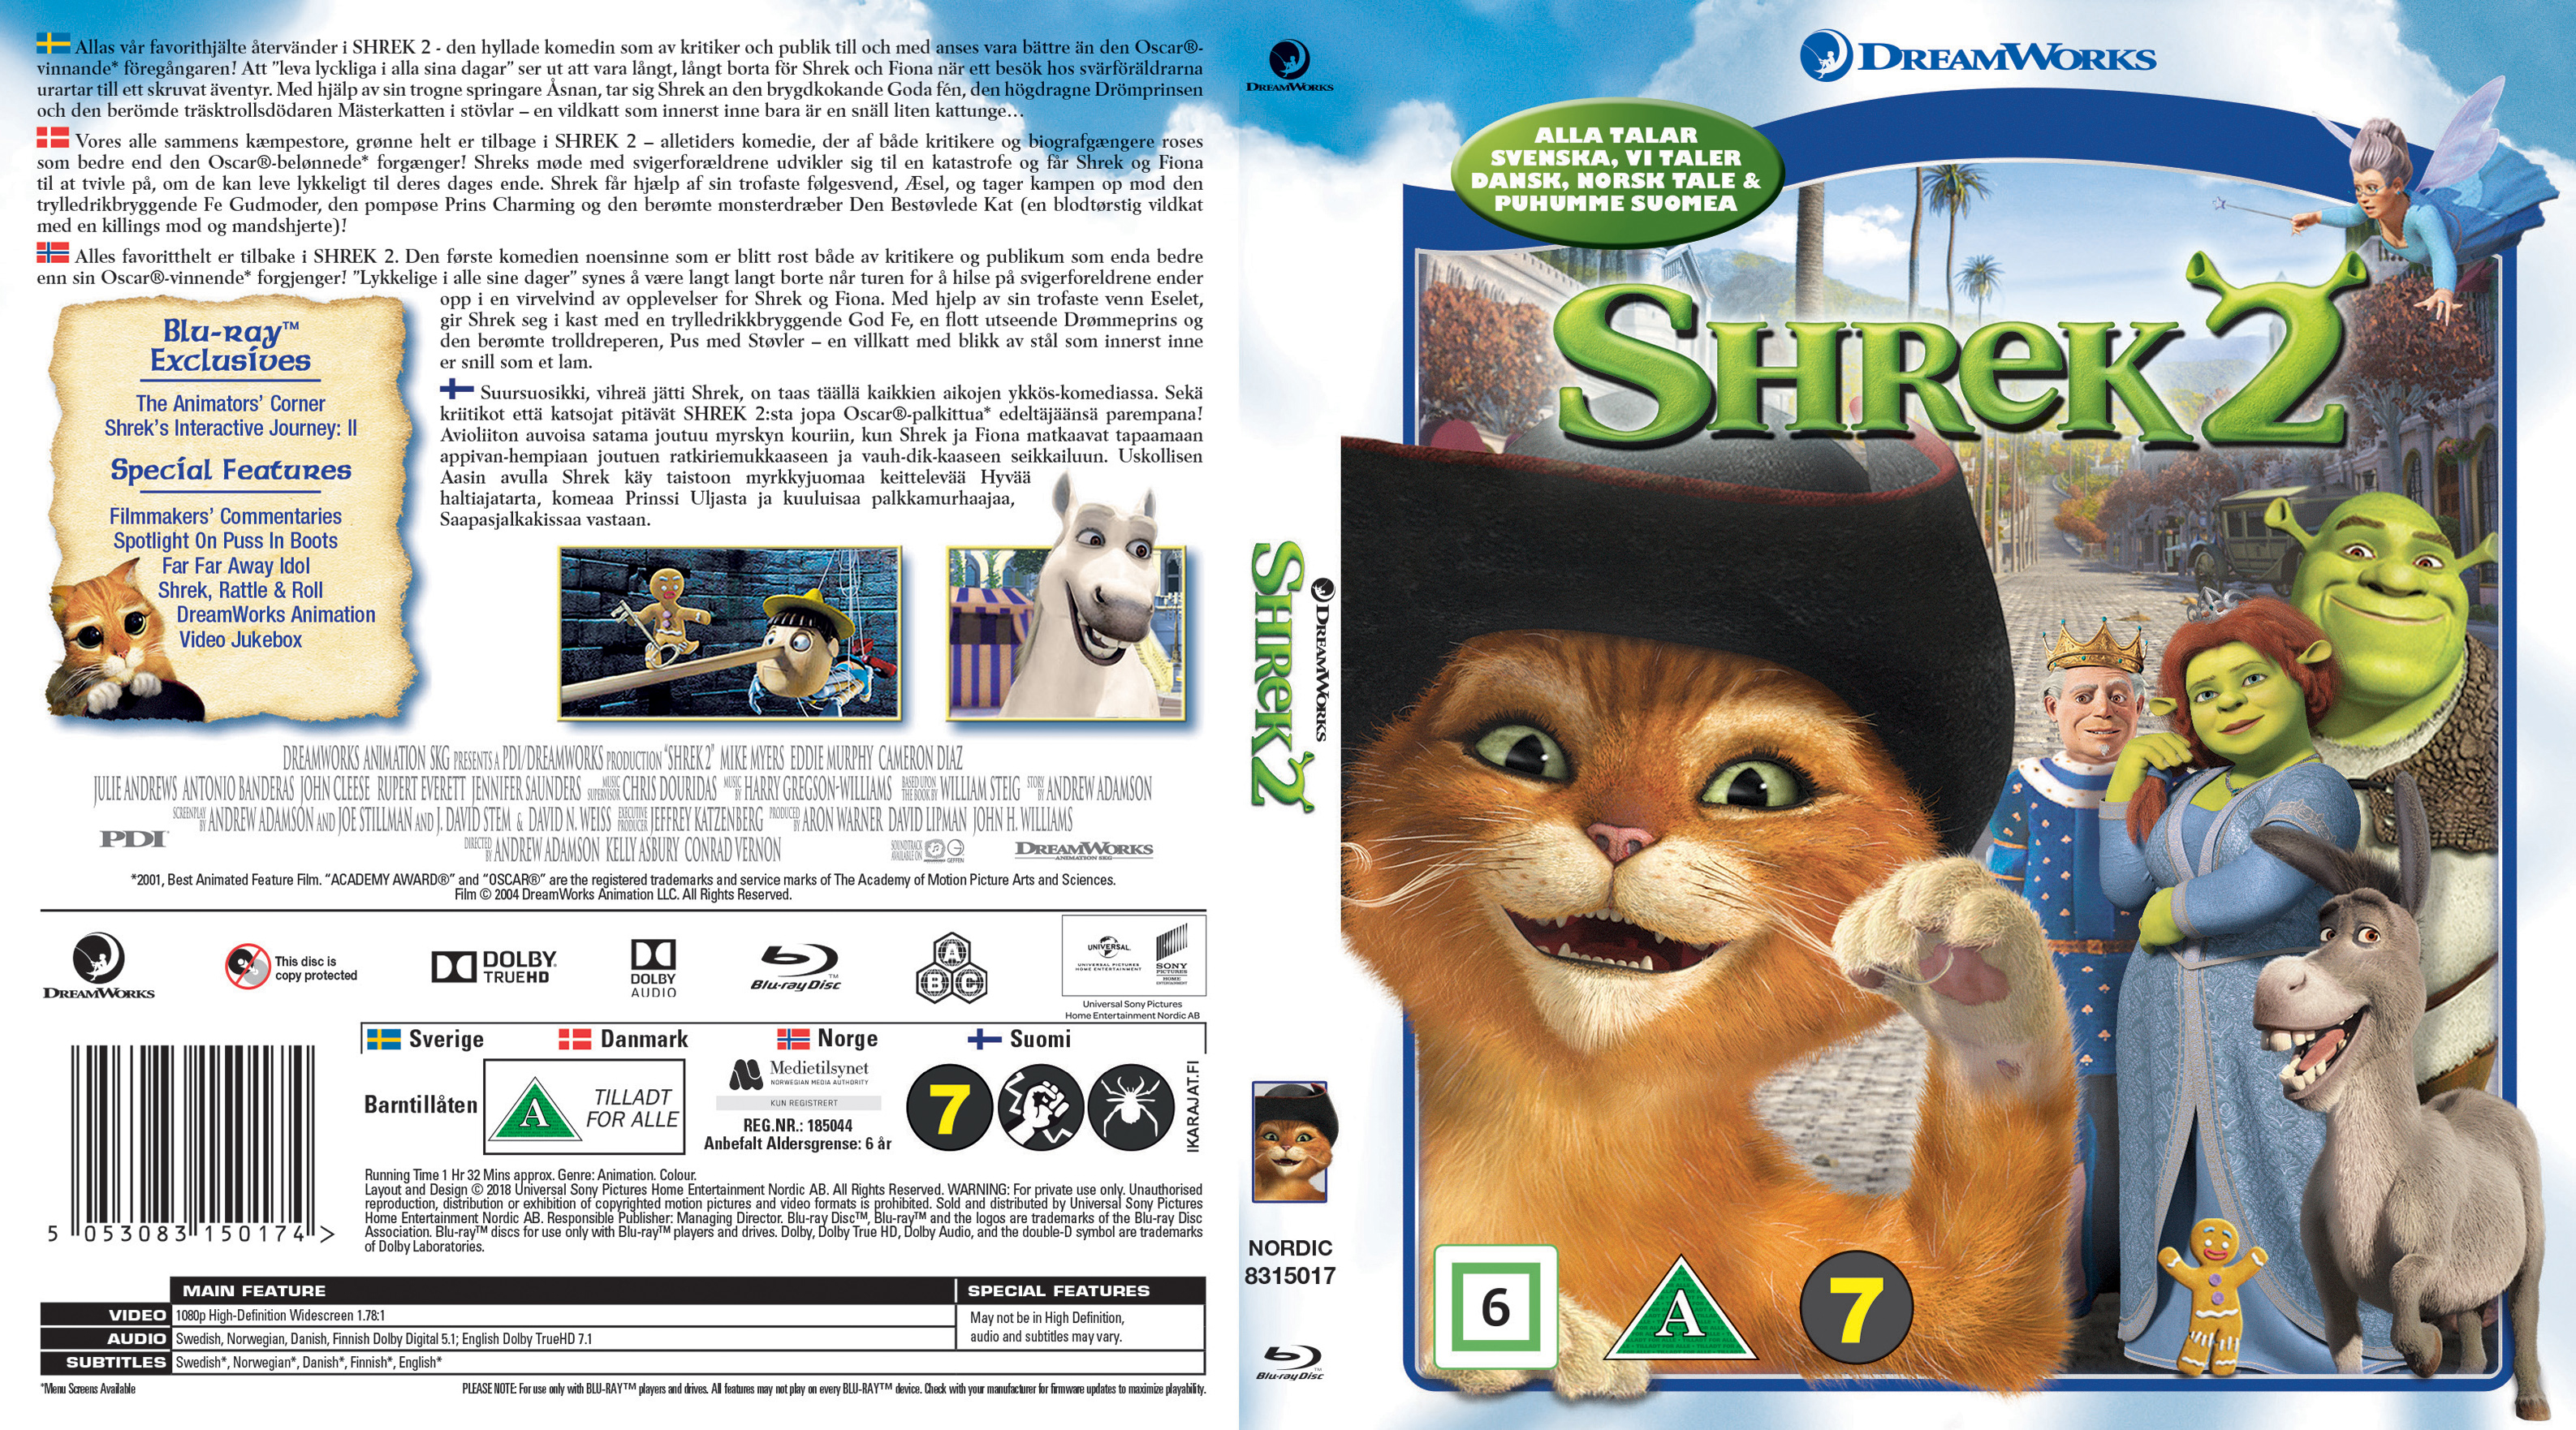 Covers Box Sk Shrek 2 Nordic Blu Ray 2004 High Quality